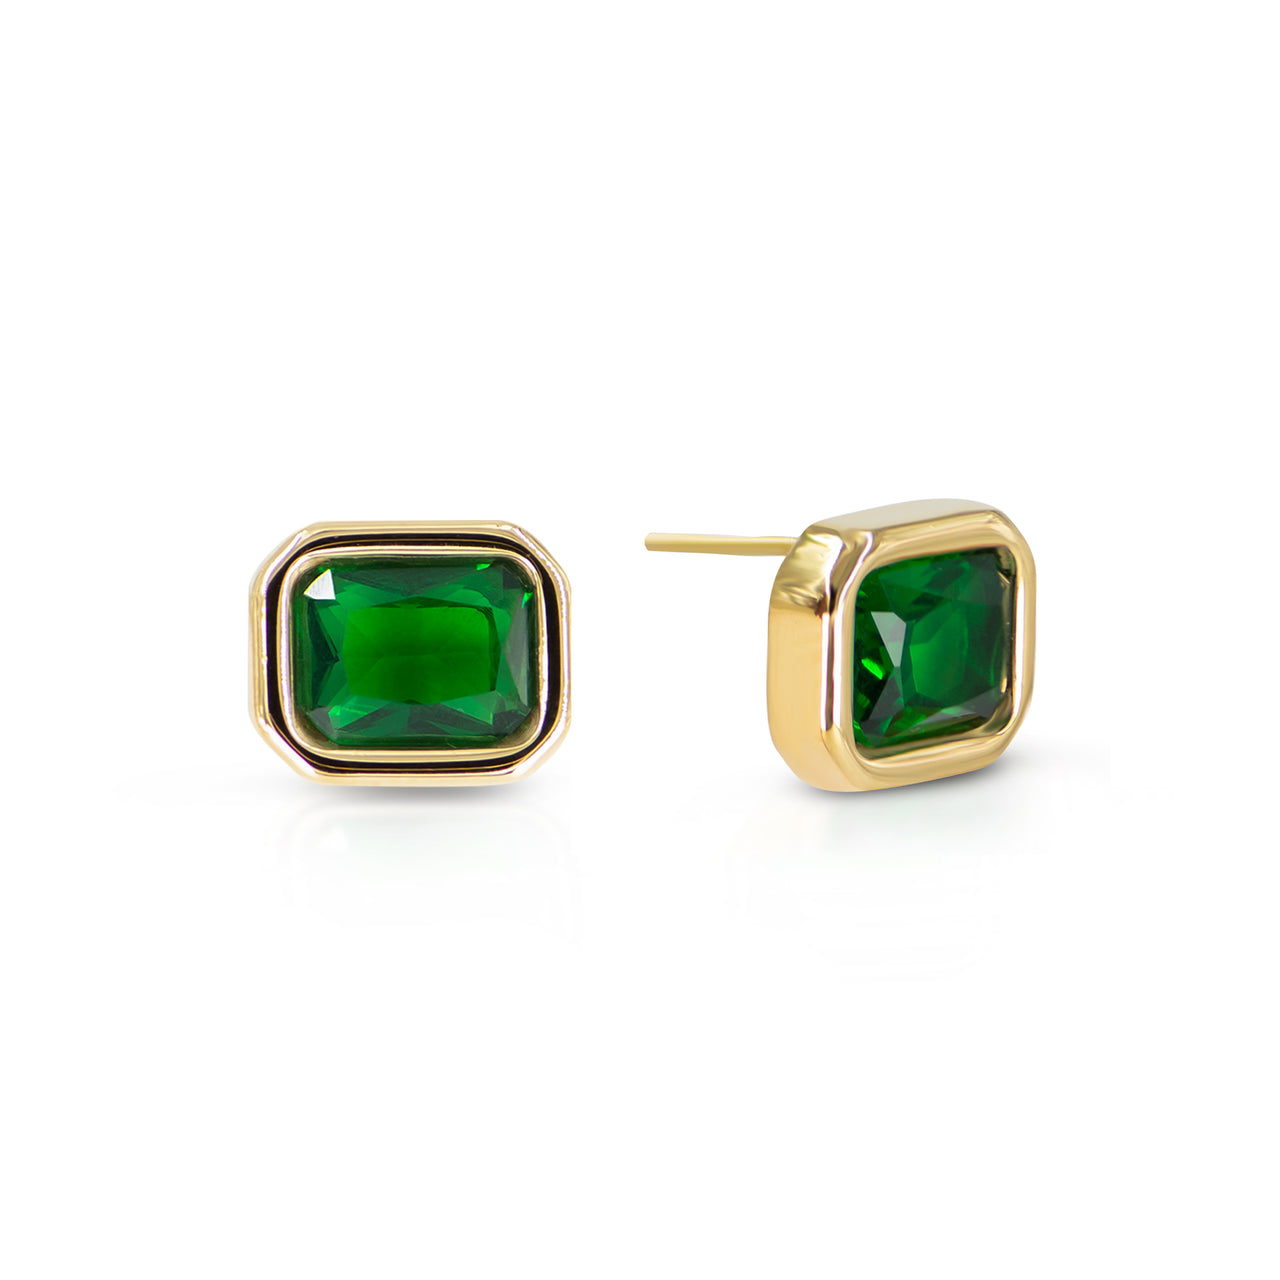 Discounted Price Emerald Green Gold Polish Stud Earrings